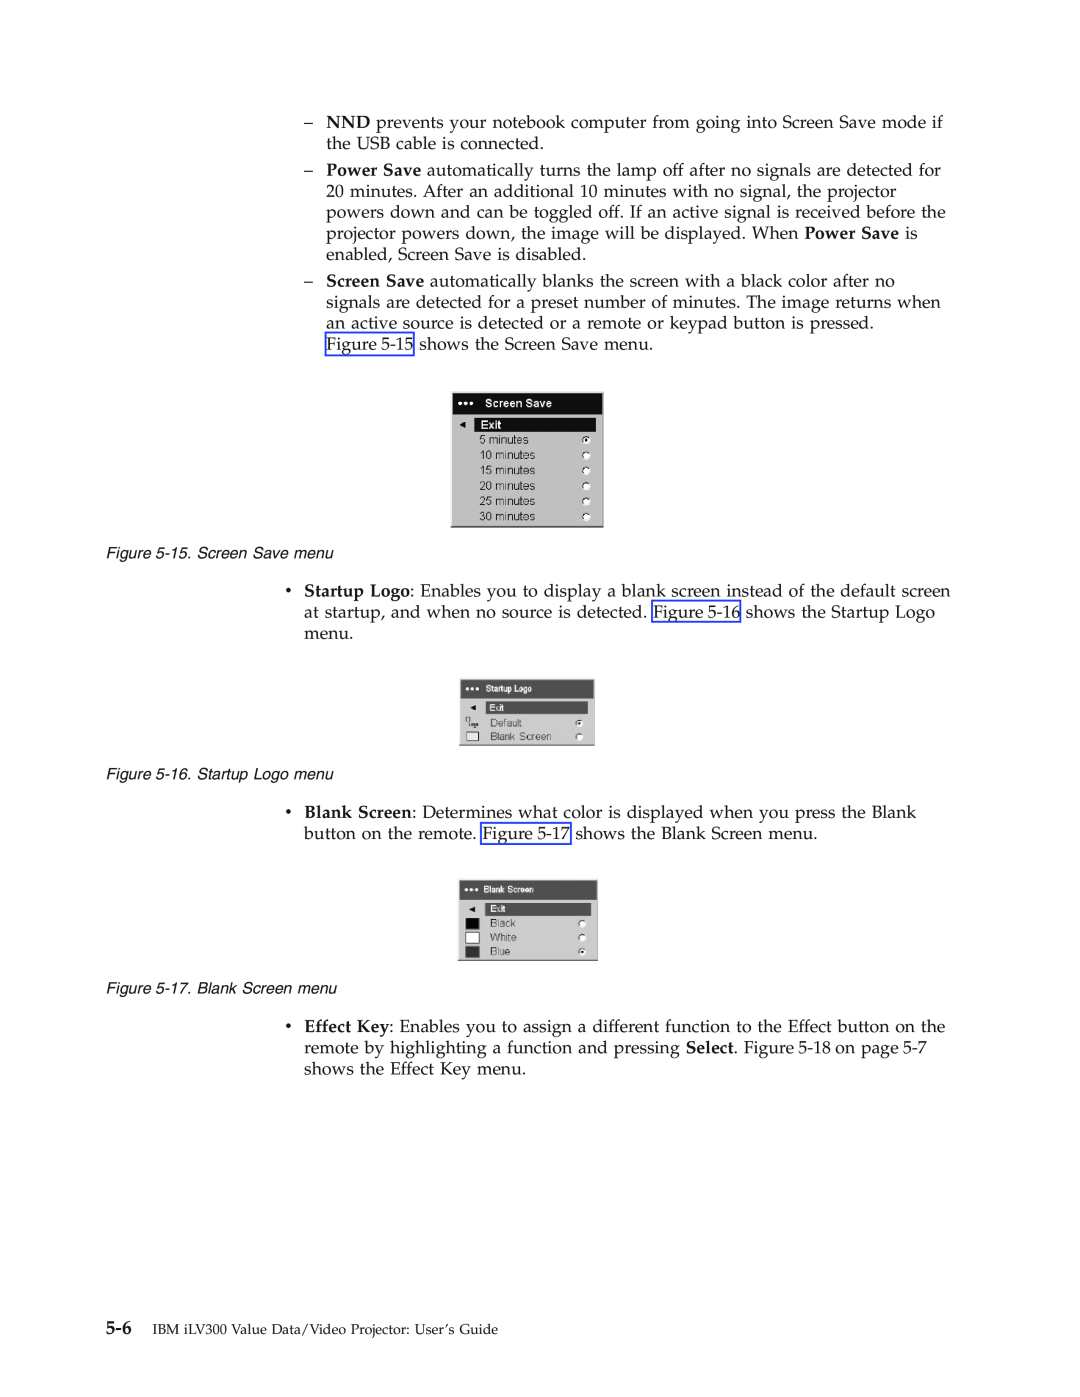 IBM Partner Pavilion iLV300 manual 15 shows the Screen Save menu 